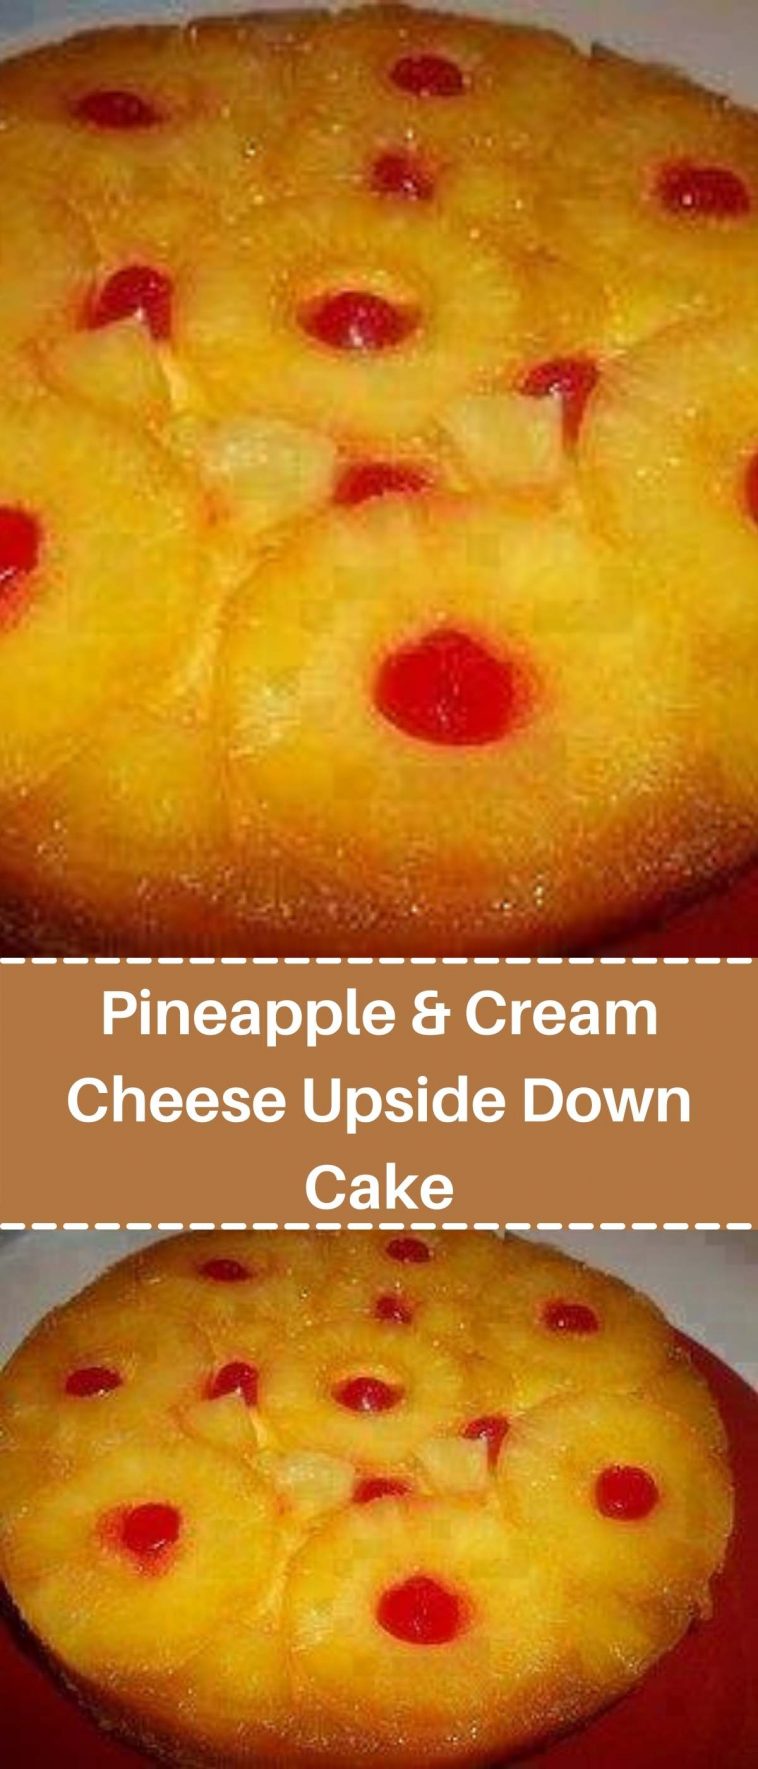 Pineapple & Cream Cheese Upside Down Cake